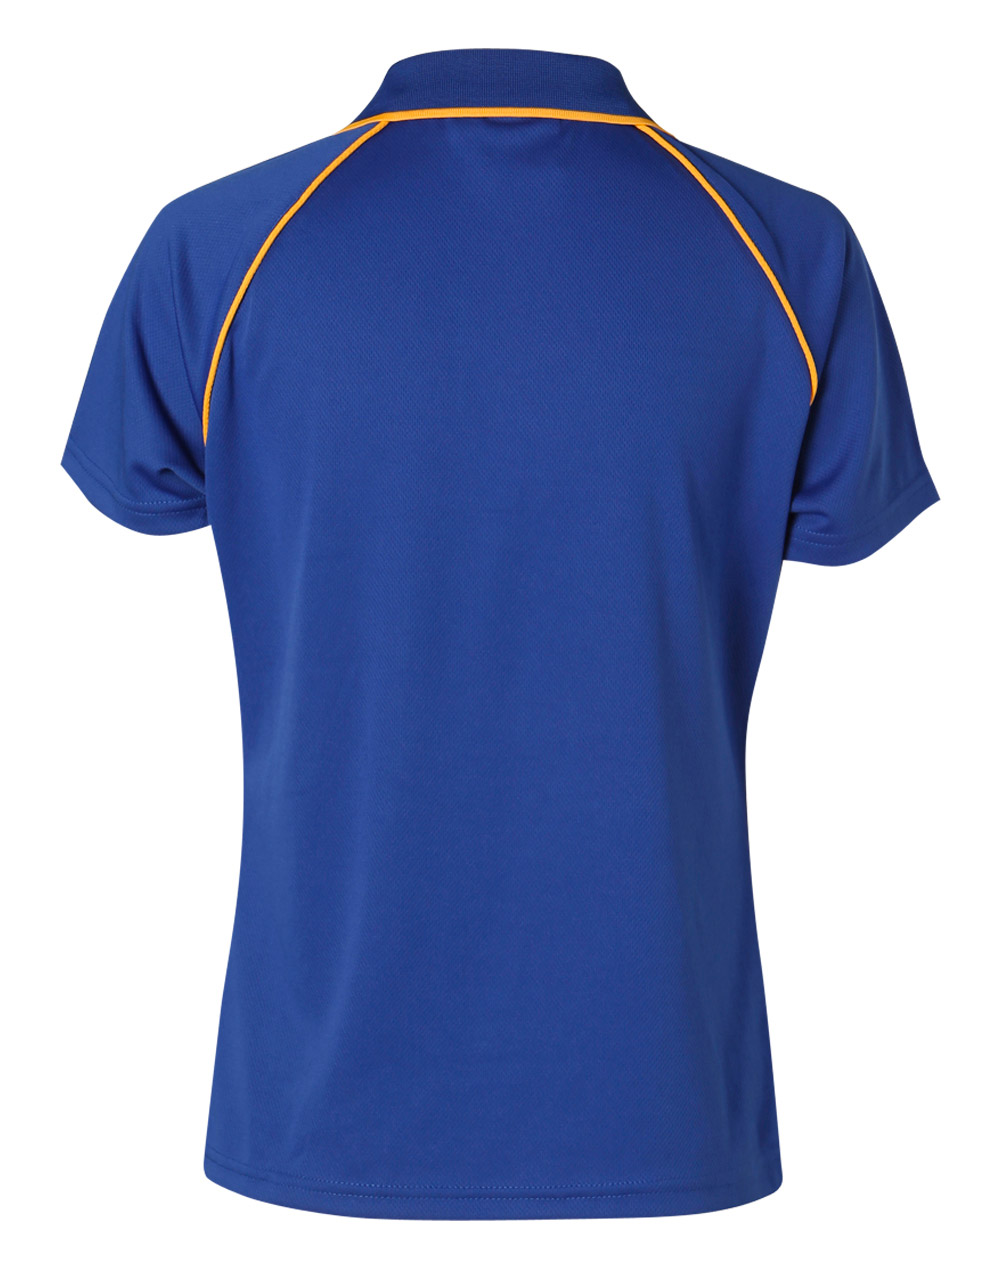 Custom Men's (Royal, Gold) Champion Raglan Polo Shirts Online Perth Australia